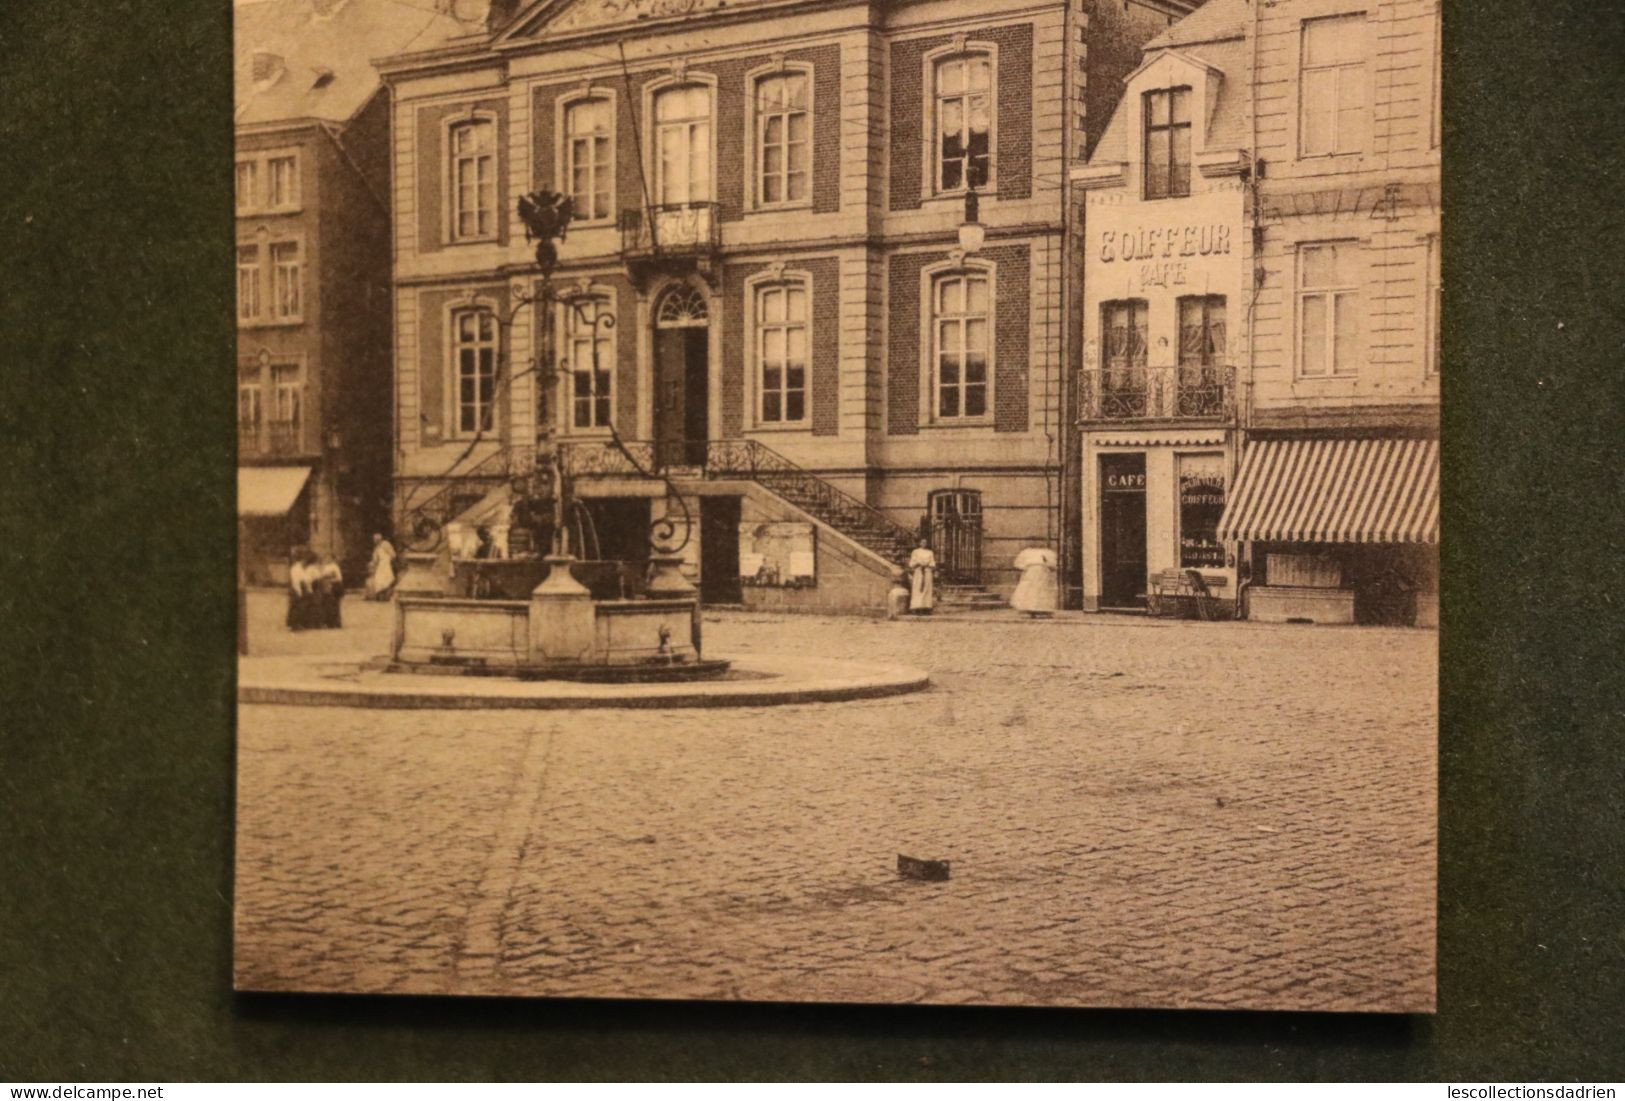 Carte Postale Ancienne - Huy - Hôtel De Ville - Huy